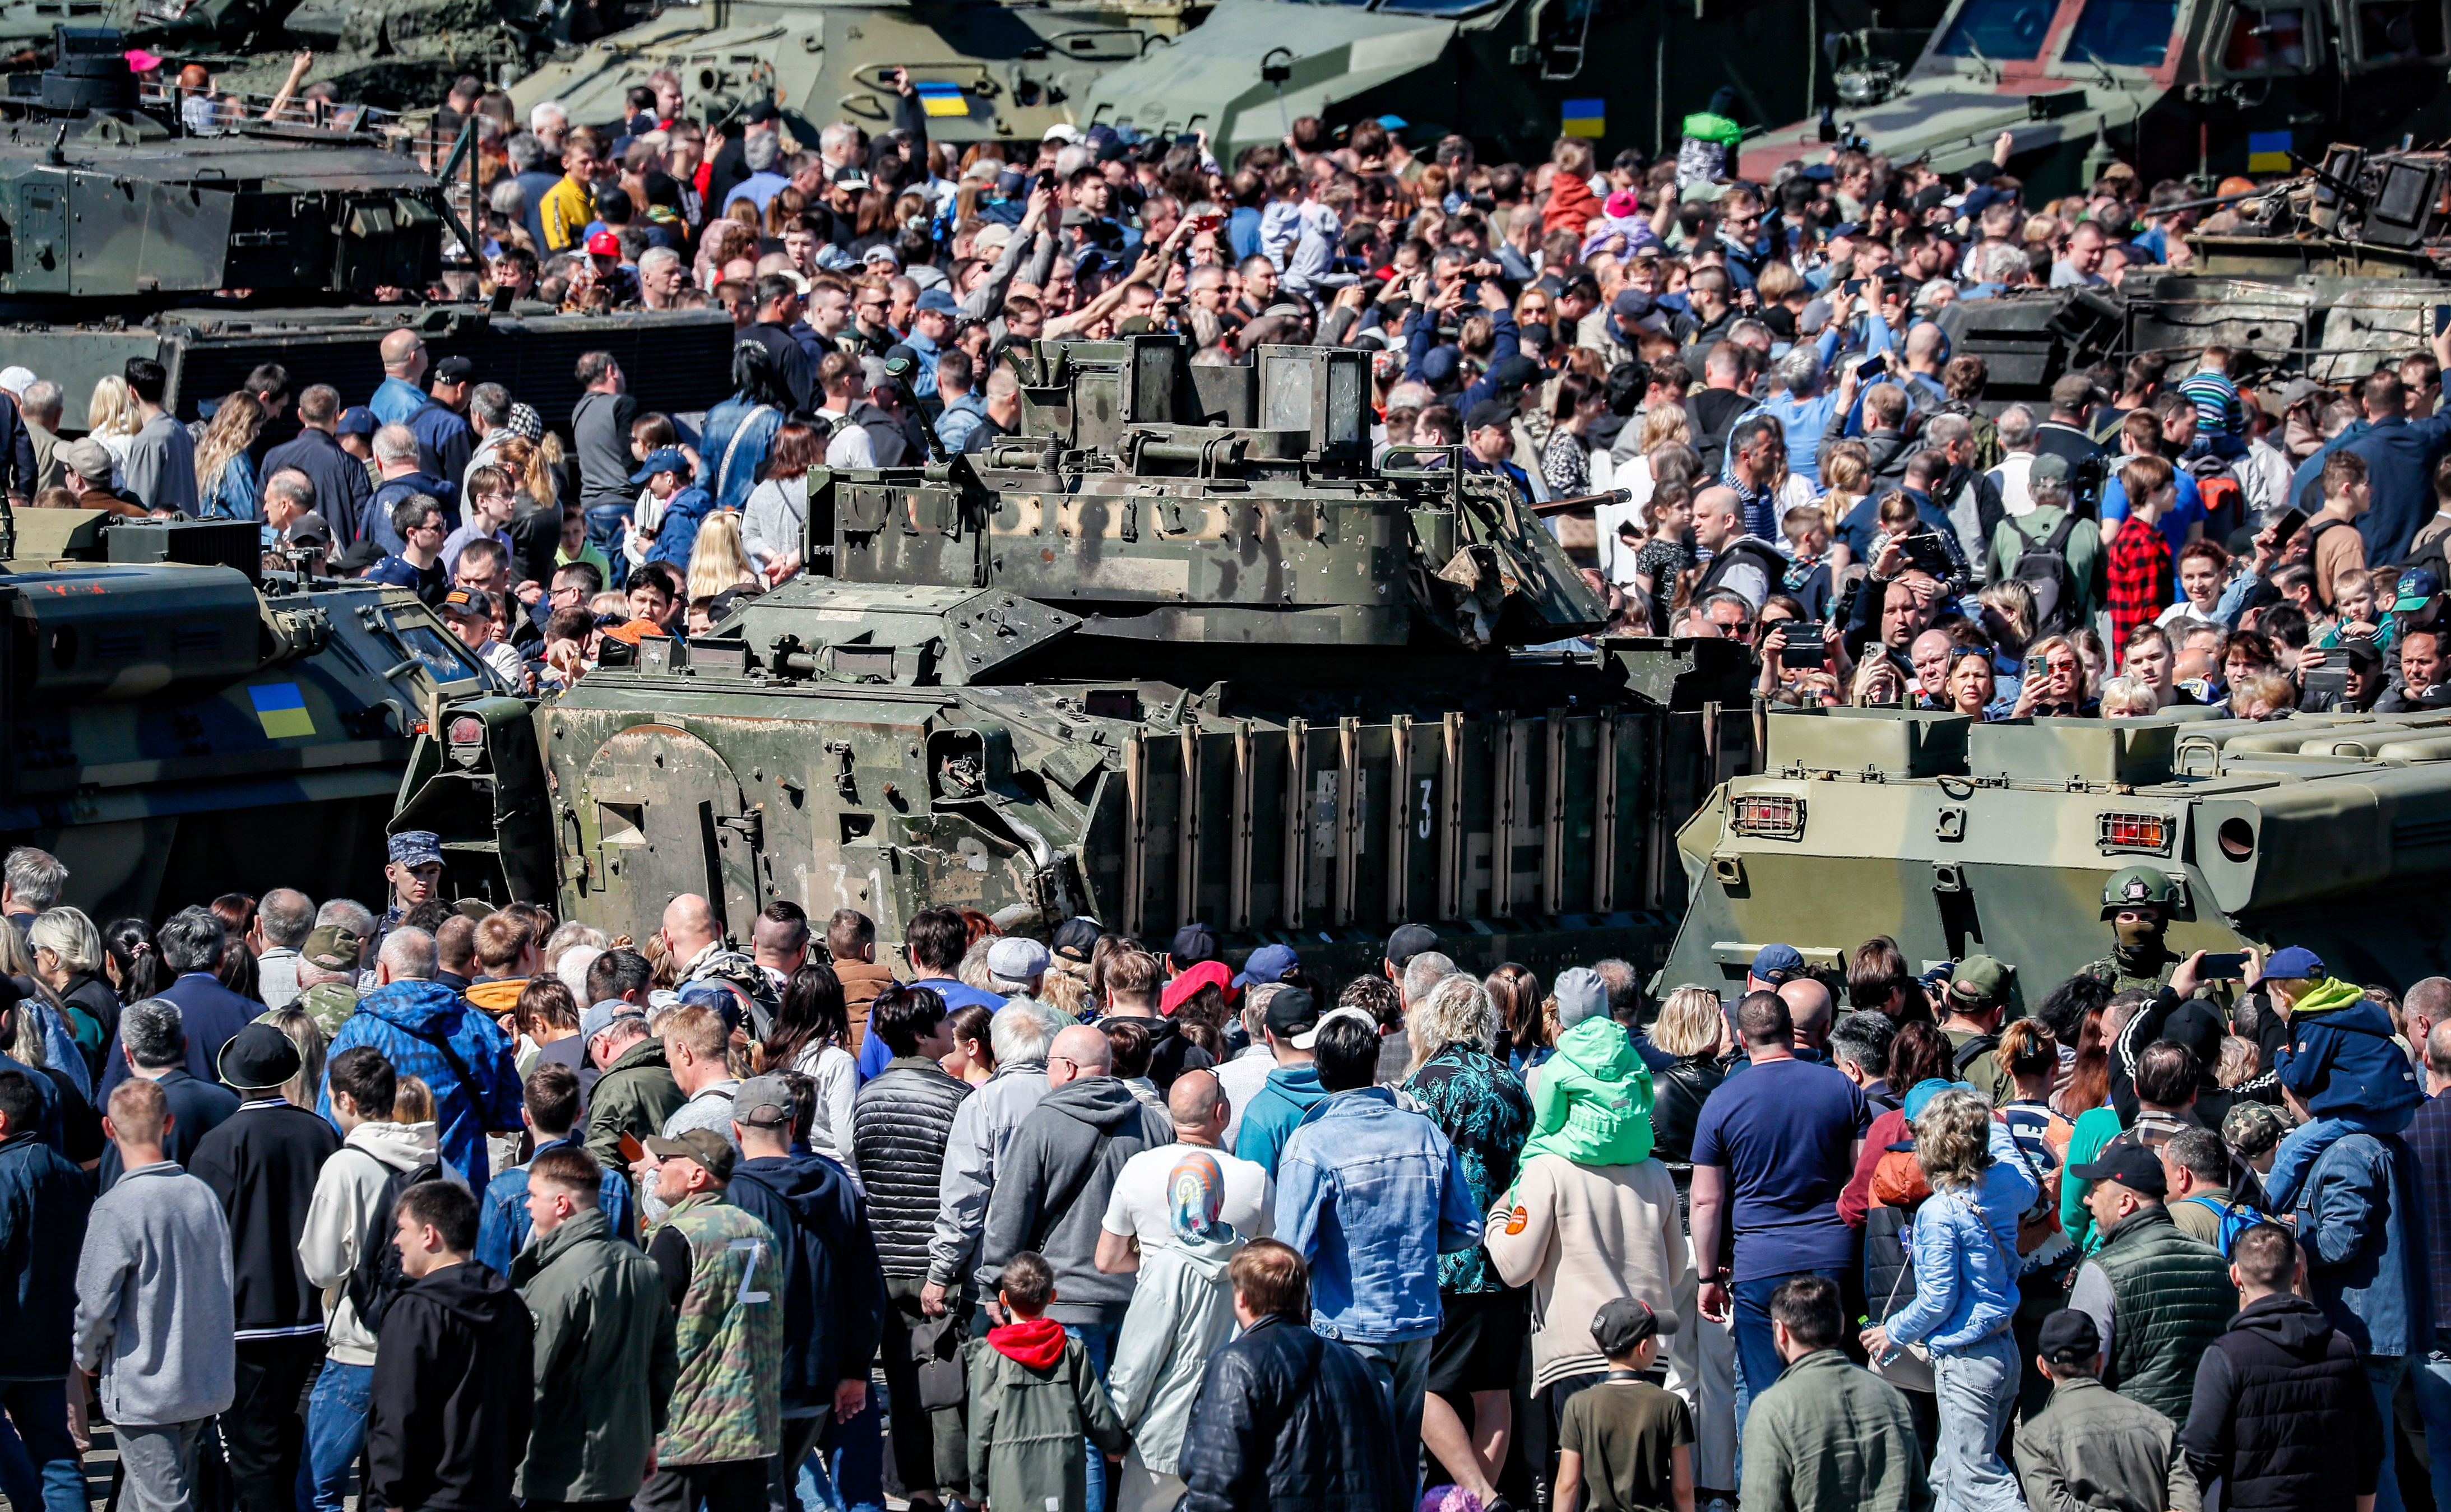 confident of victory over ukraine, russia exhibits western war trophies